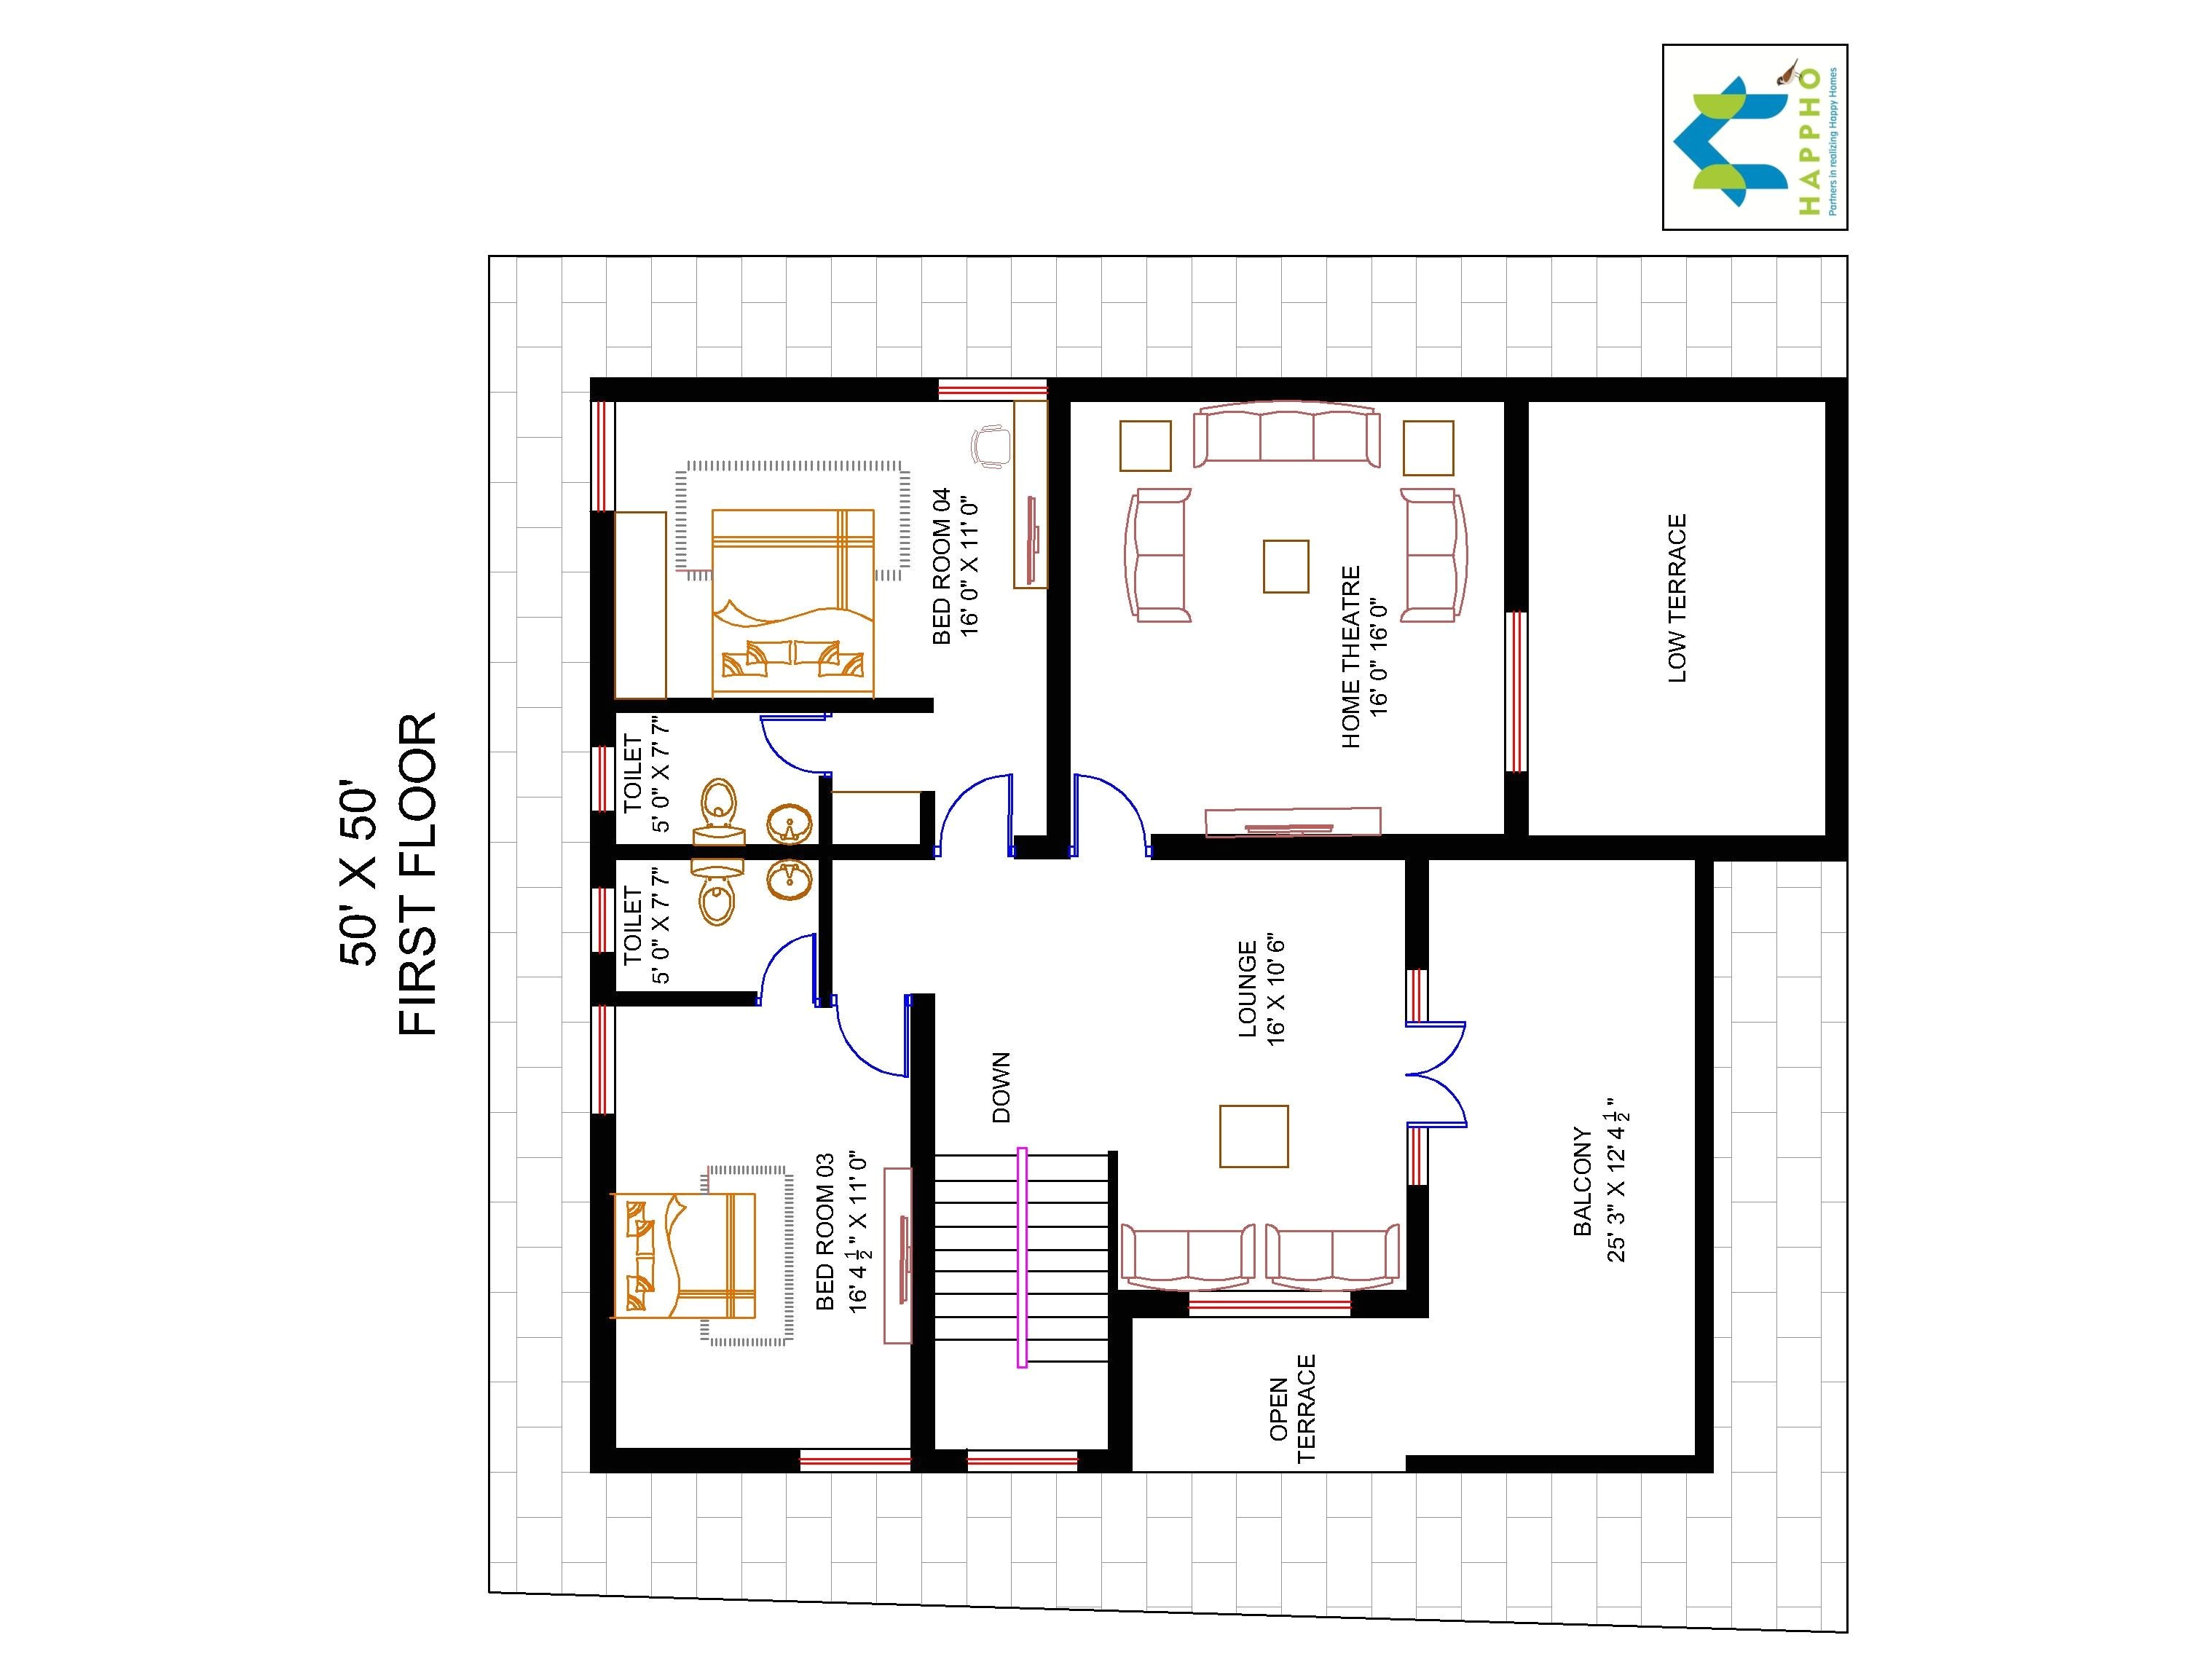 2500 sq ft bungalow floor plans